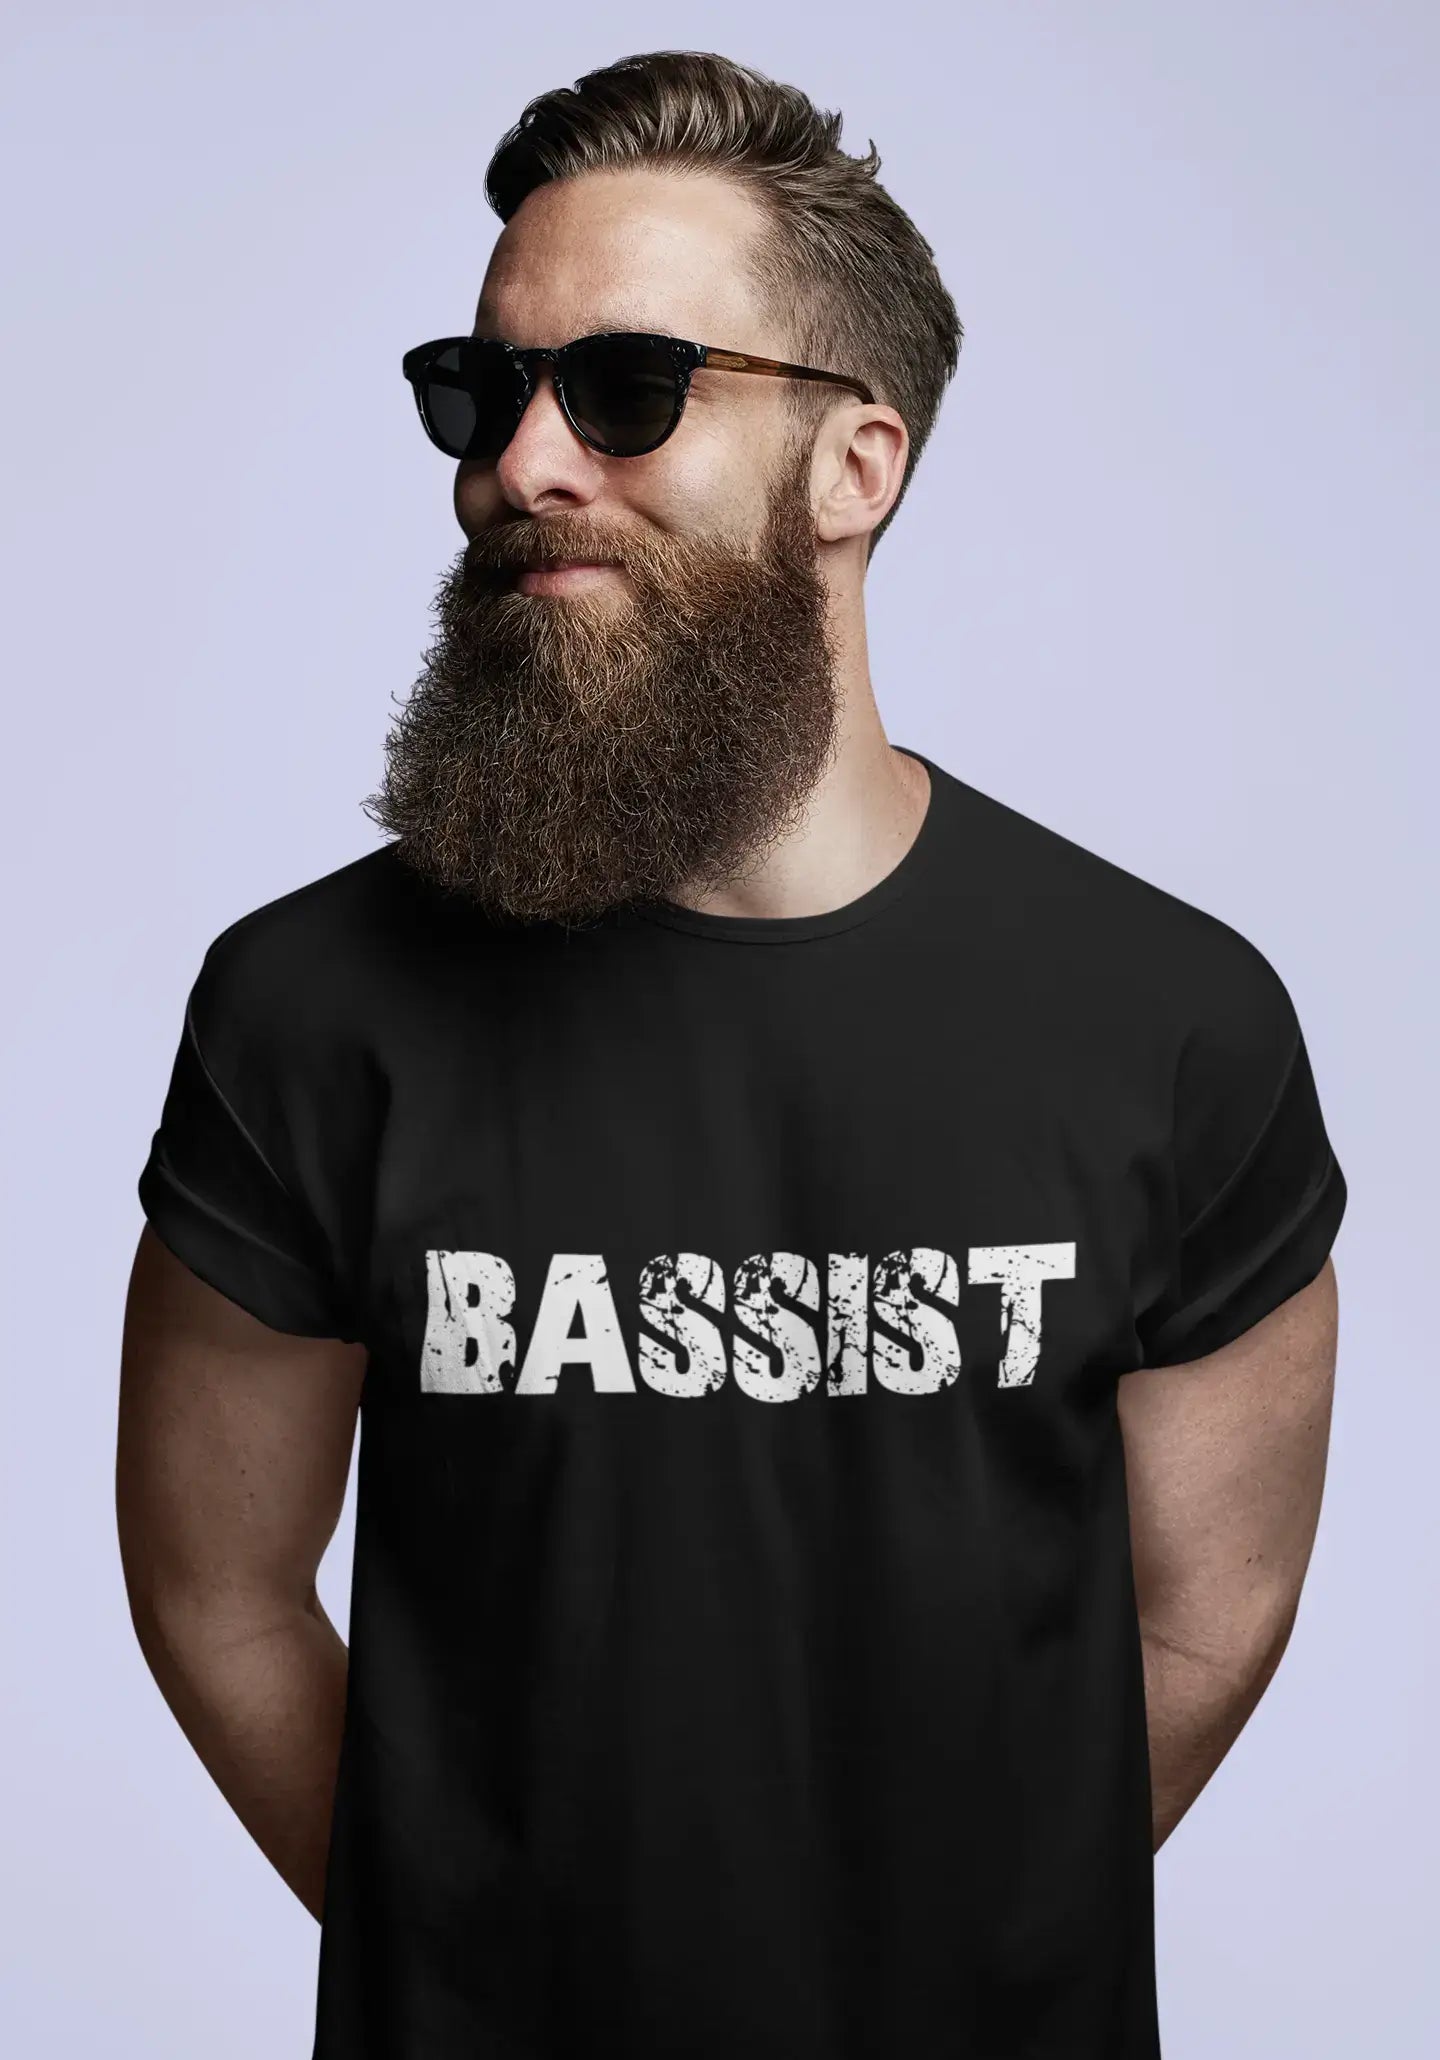 Bassist Herren Vintage T-Shirt Schwarz Geburtstagsgeschenk 00555